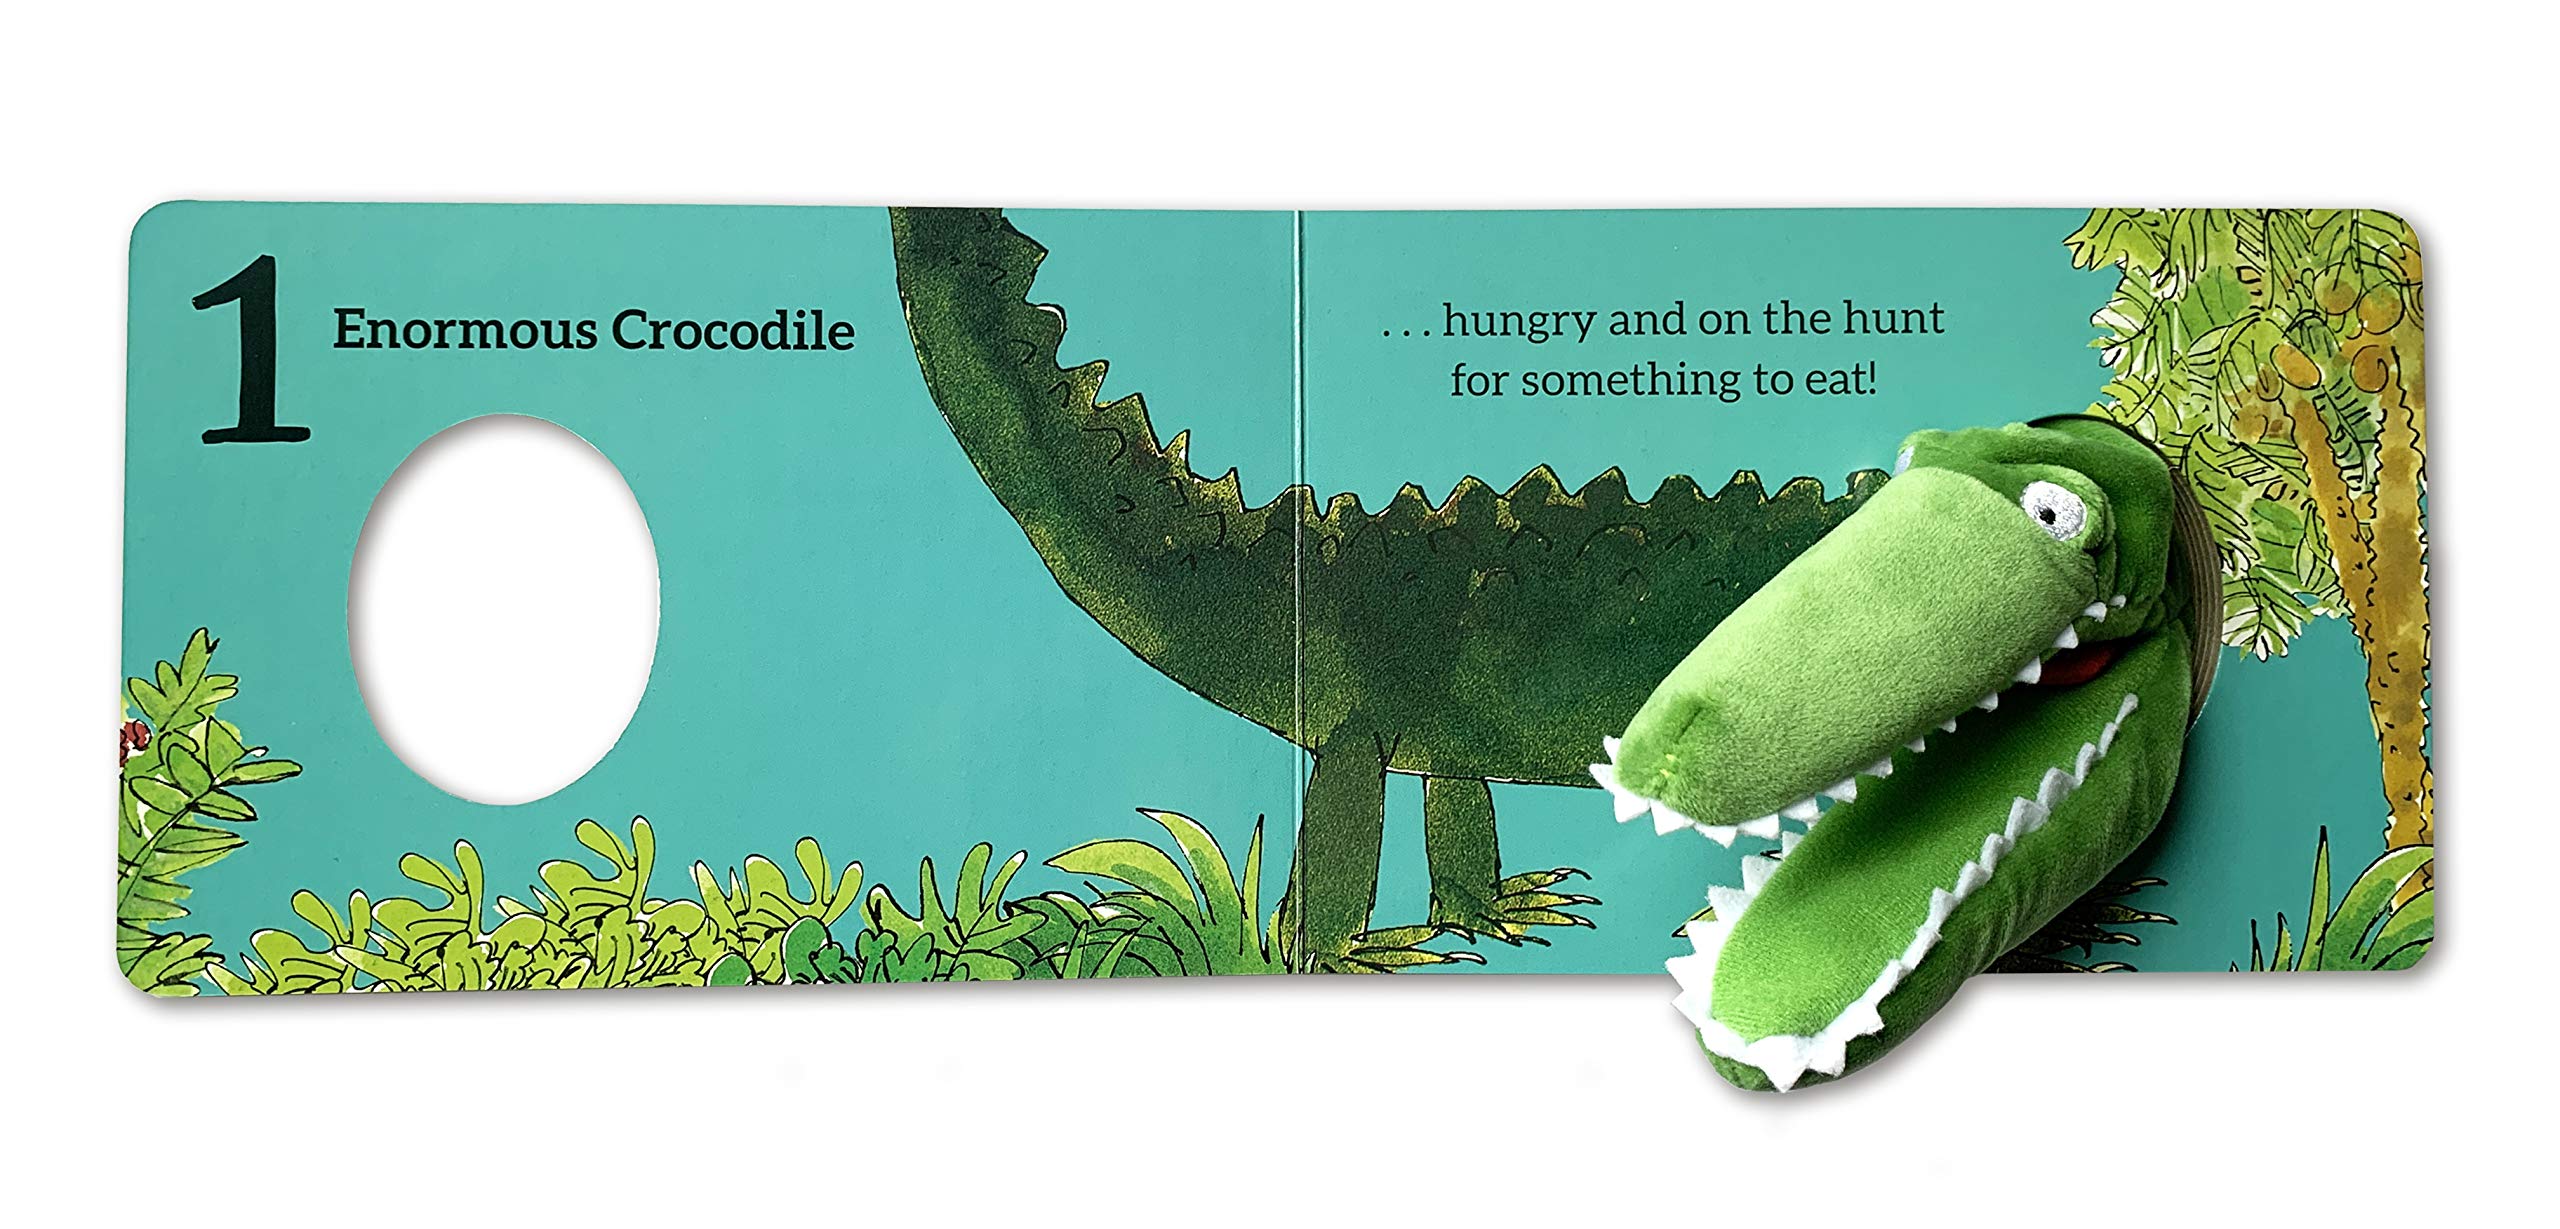 The Enormous Crocodile's Finger Puppet Book